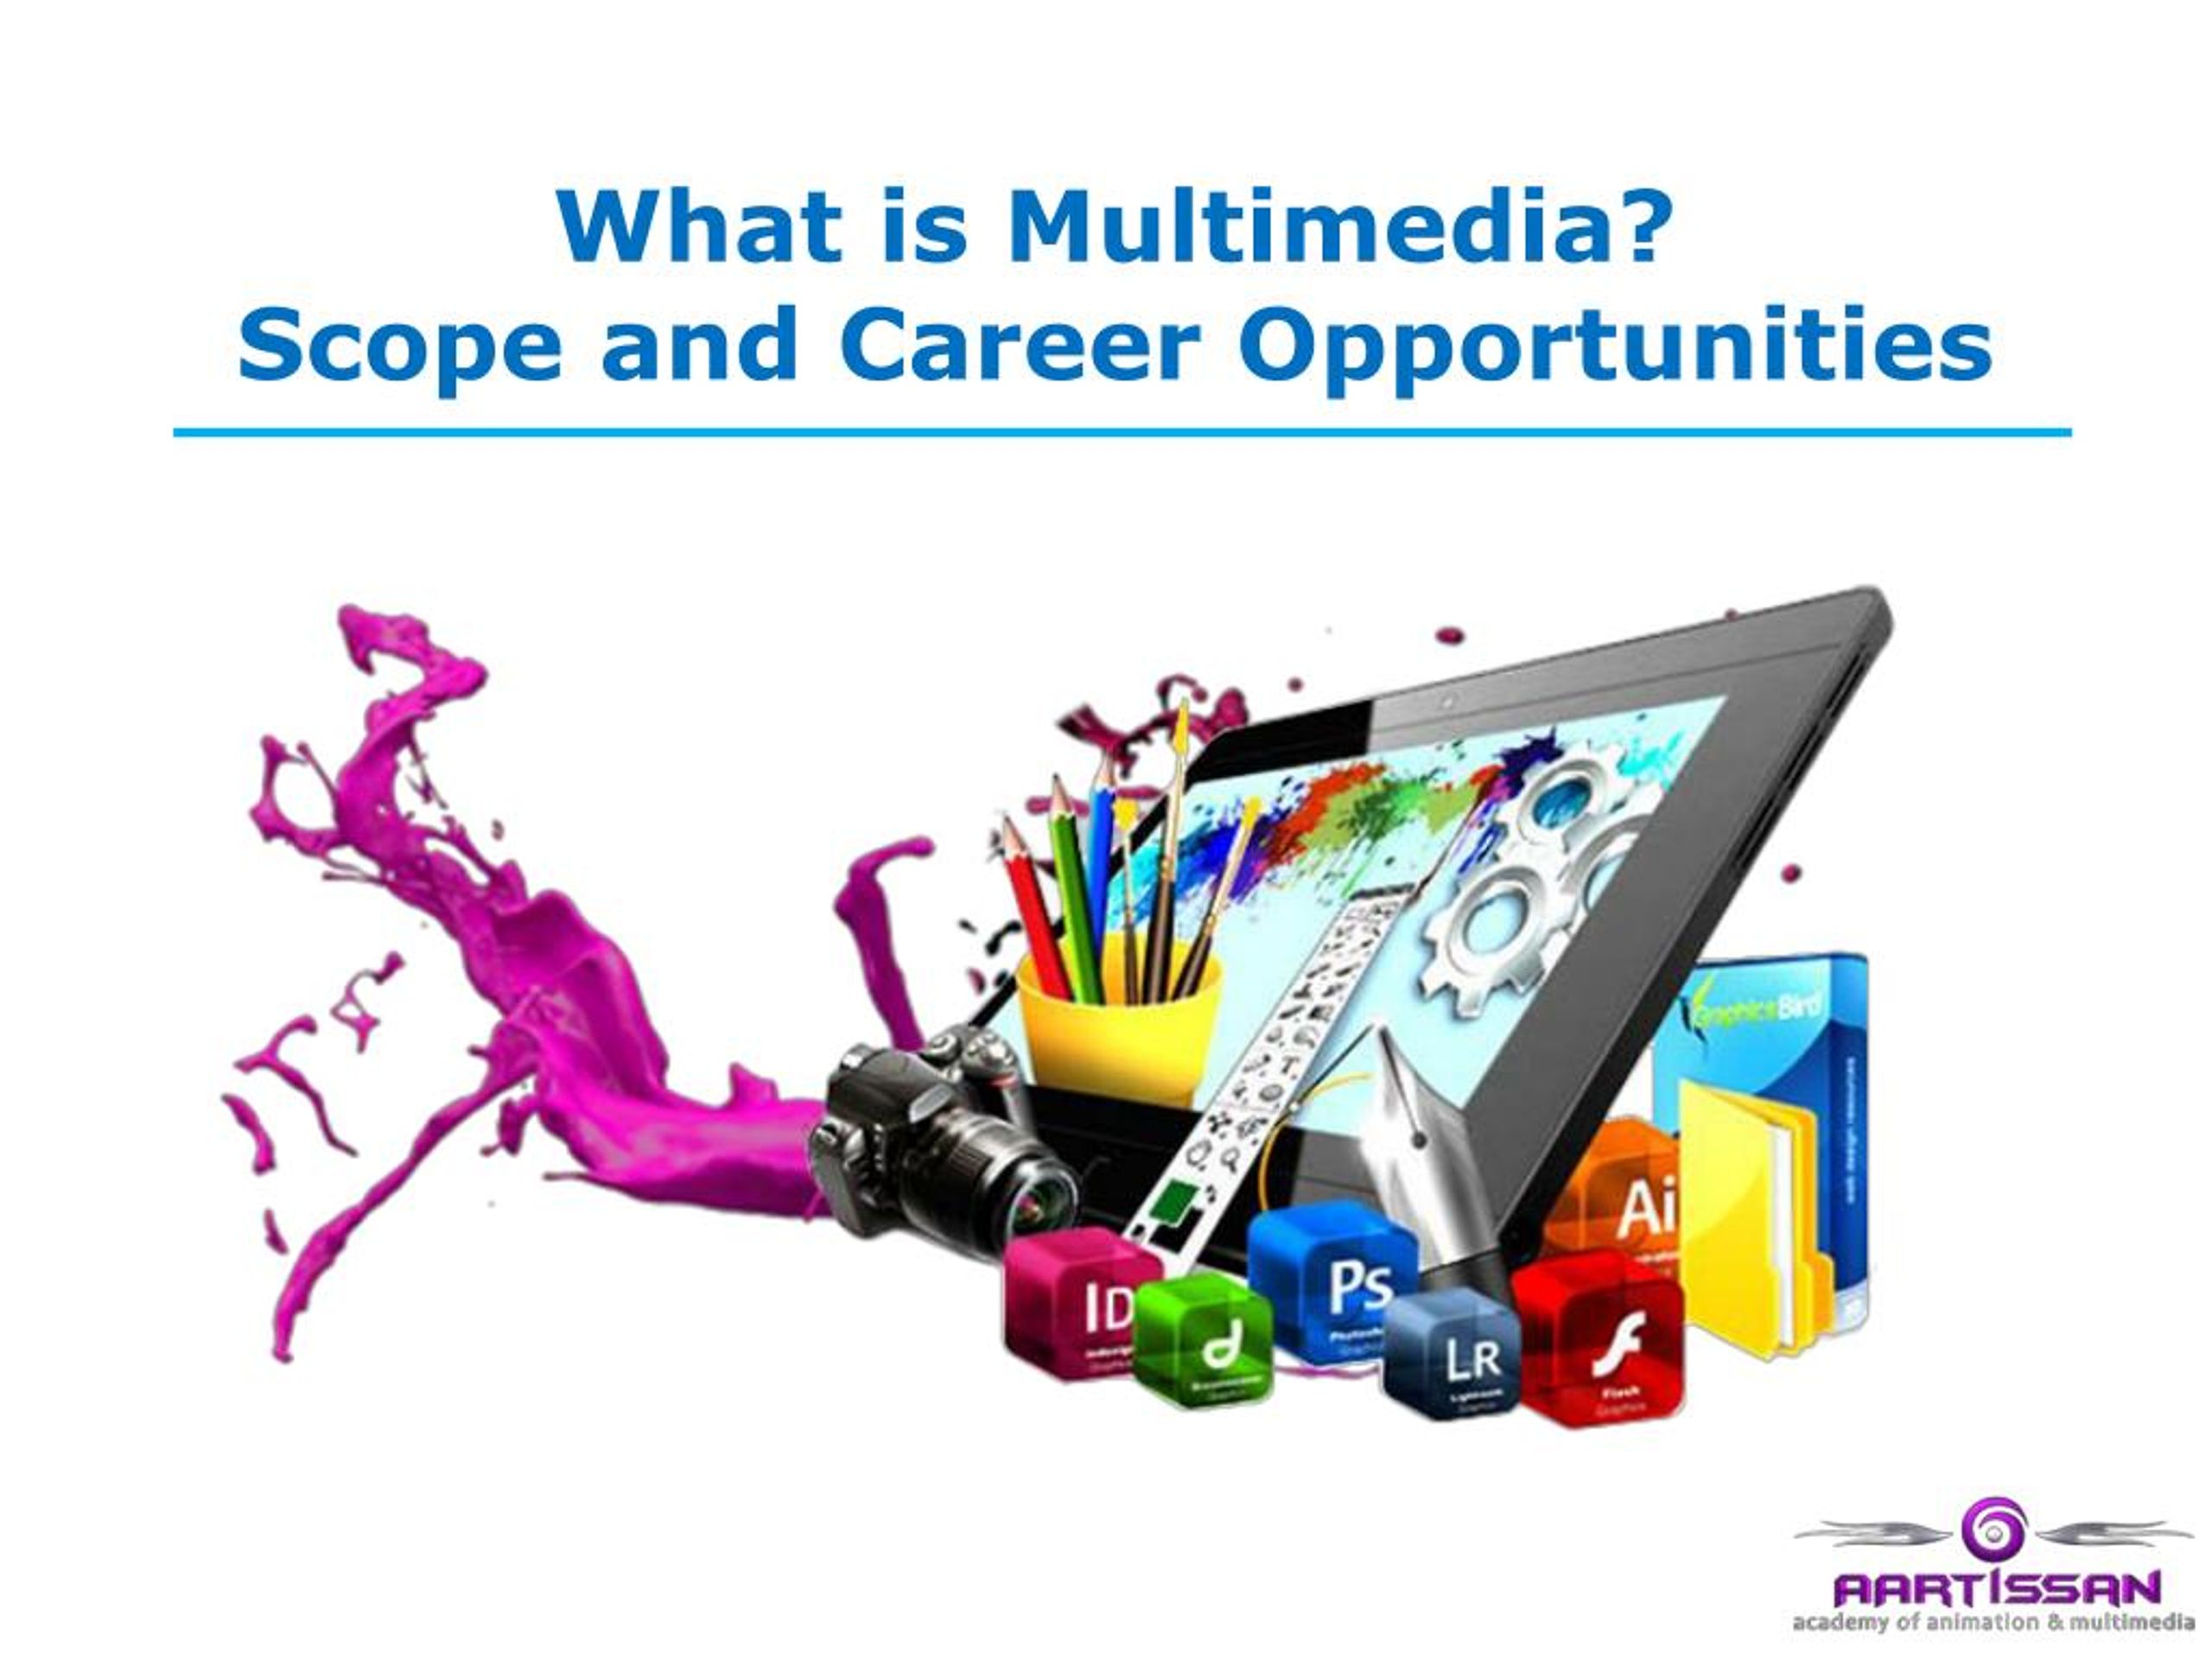 Job opportunities for multimedia